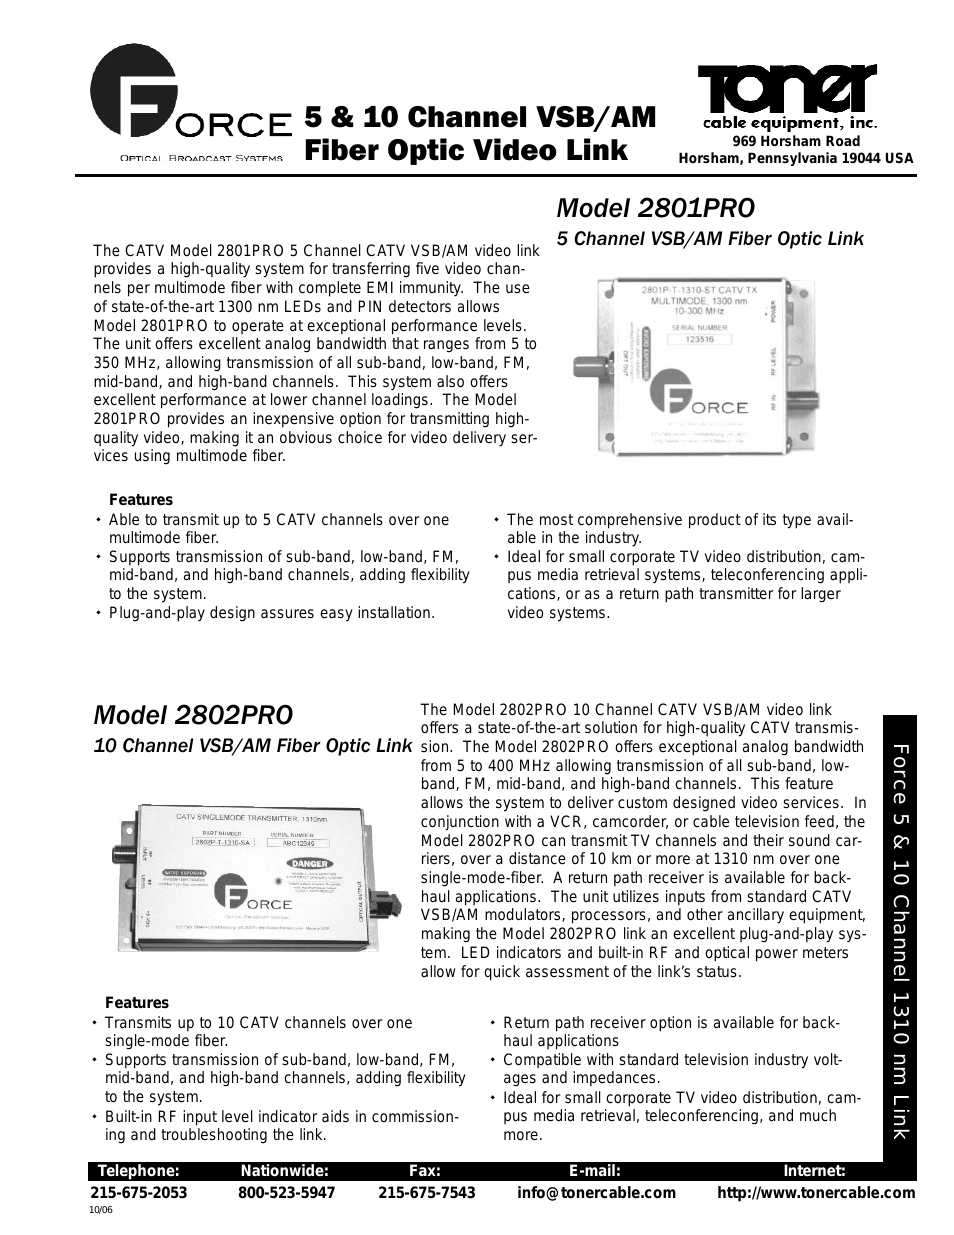 2801 PRO 5 Channel VSB_AM Fiber Optic Transmitter - Fiber Optic Receiver